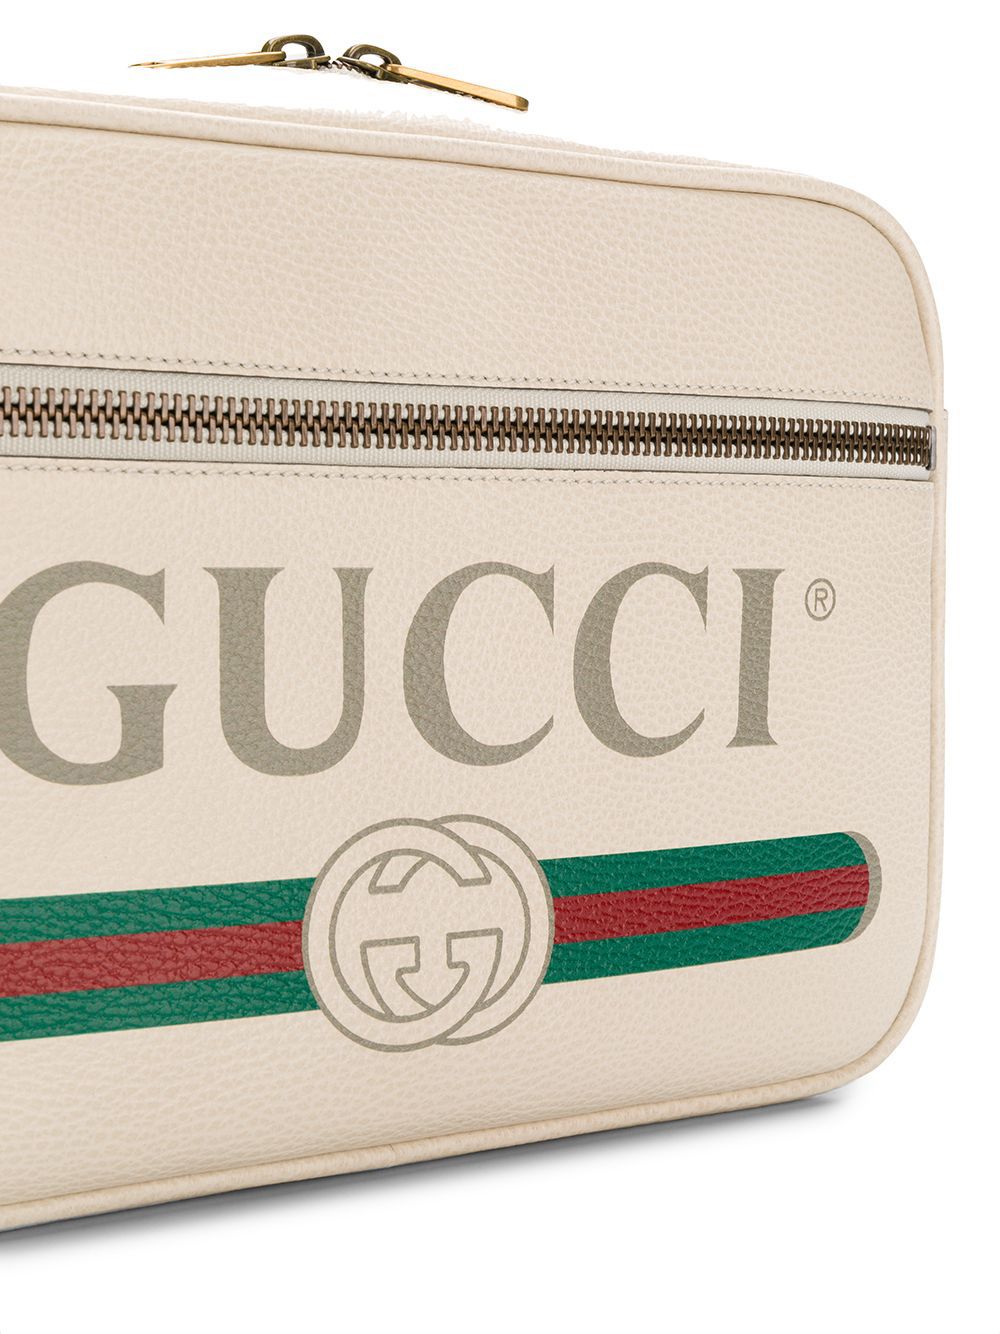 фото Gucci сумка на плечо с принтом логотипа